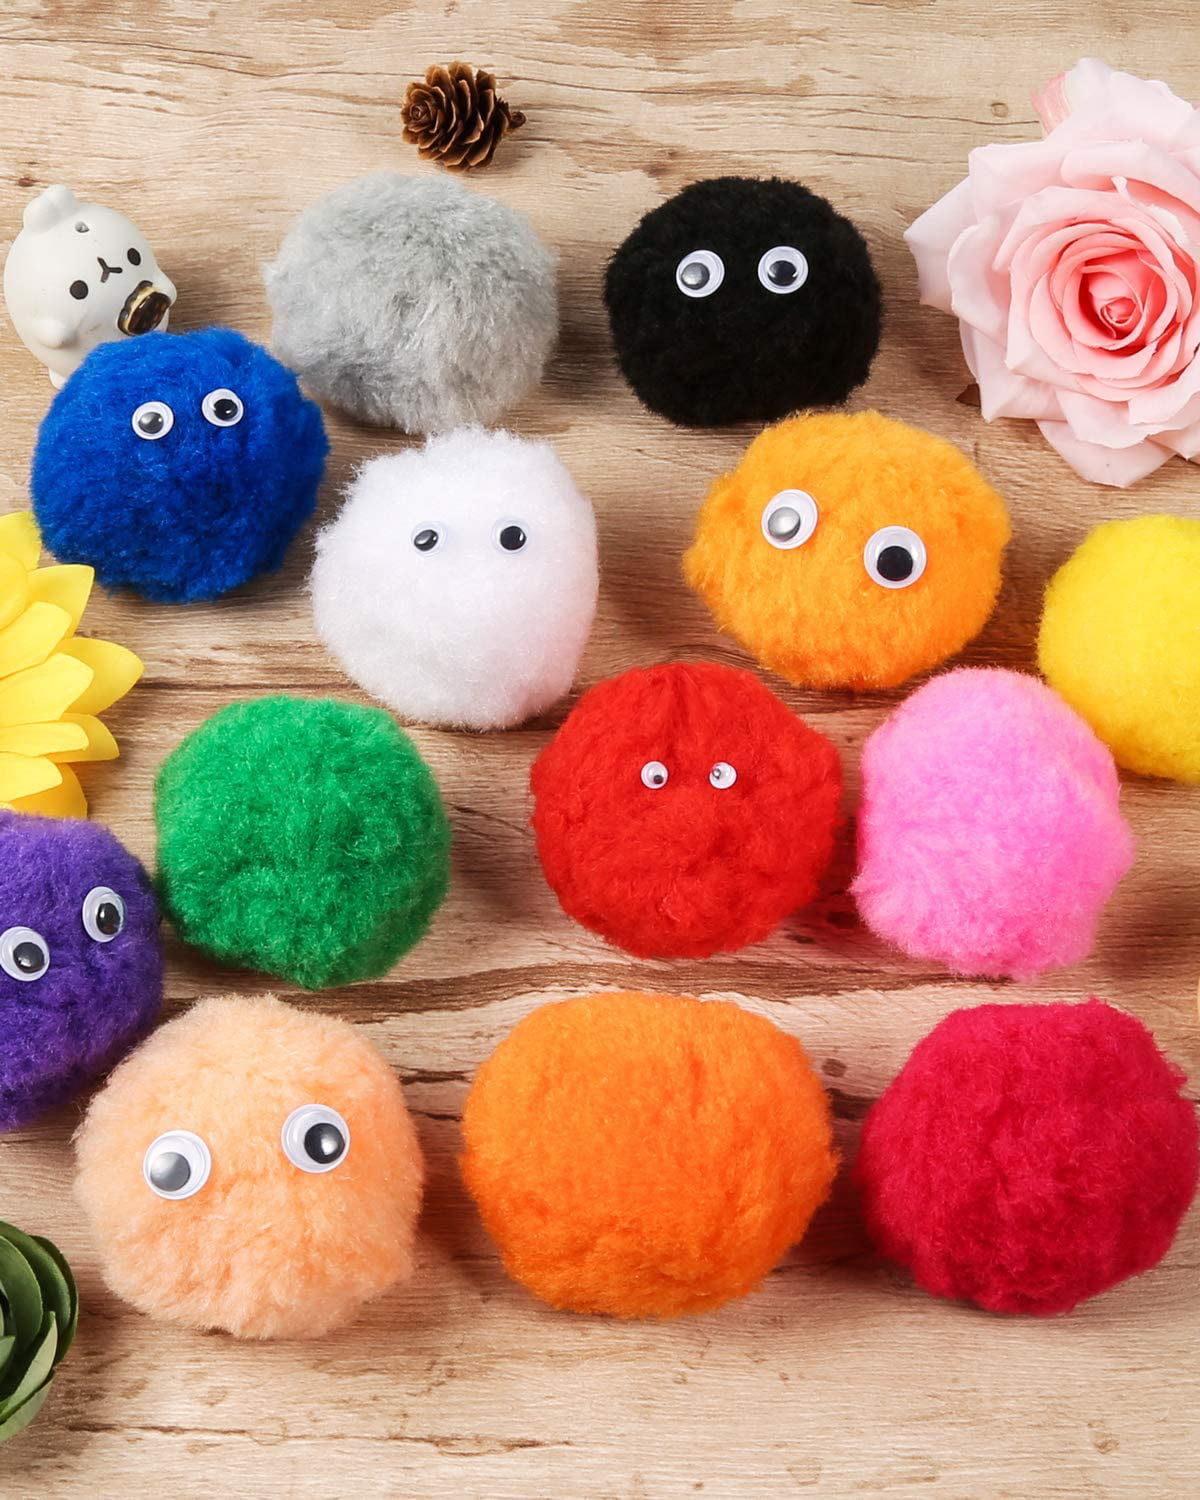 TOYMIS 500pcs 1cm Mini Pom Poms, Fuzzy Pom Pom Balls Pom Poms Arts and  Crafts Multi Colored Pom Poms for DIY Art Creative Crafts Projects  Decorations